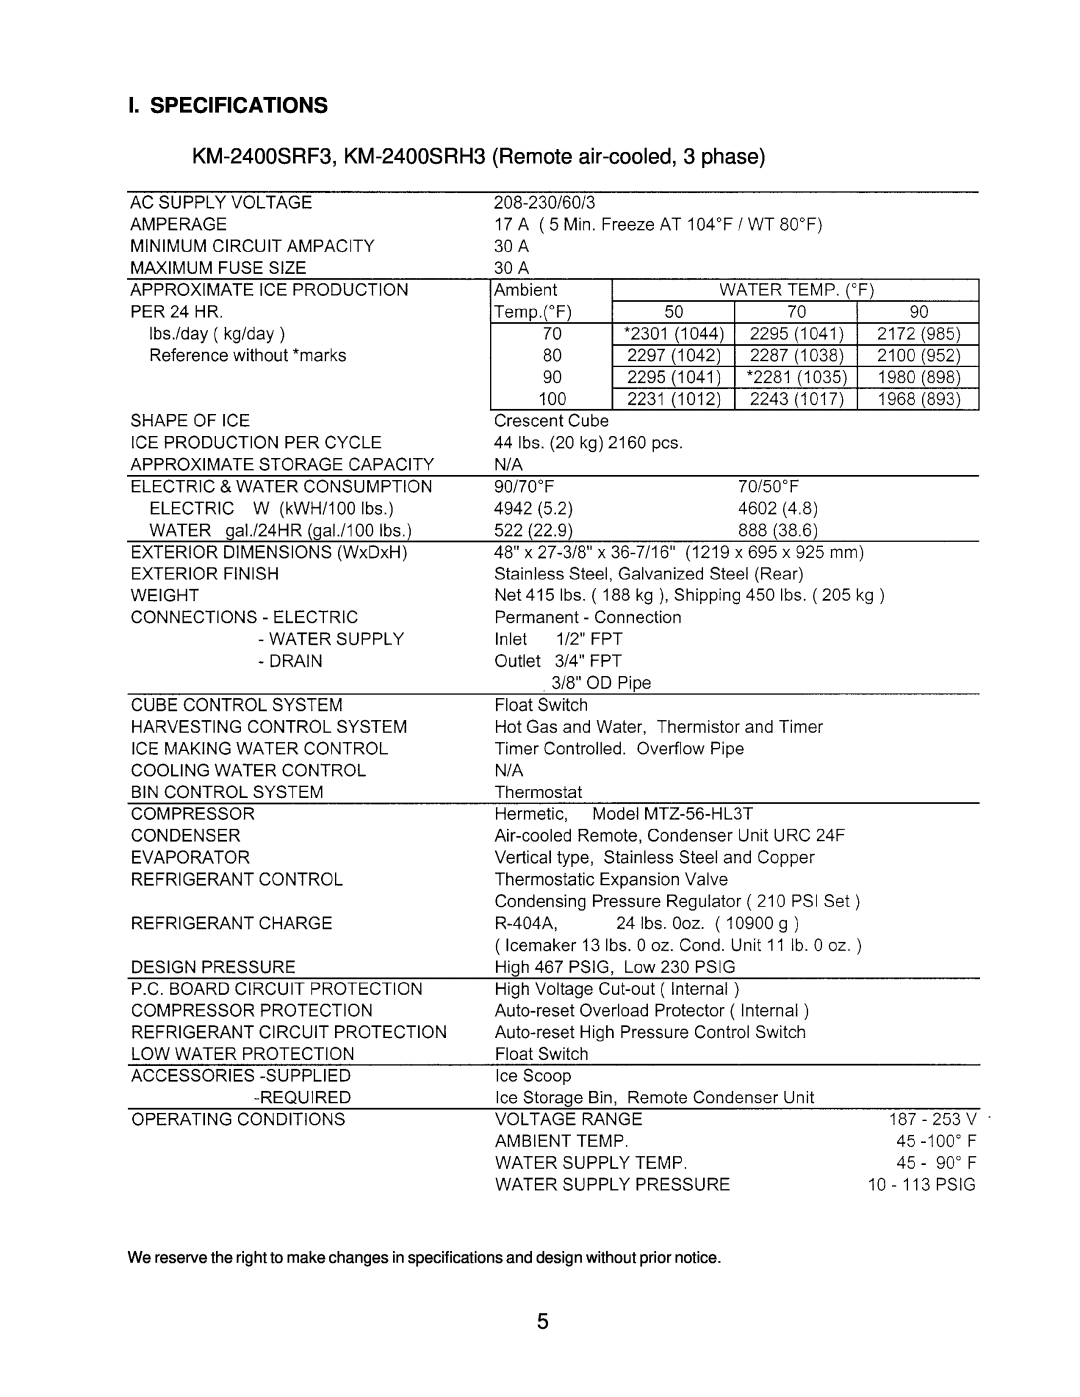 Hoshizaki service manual I. Specifications, KM-2400SRF3, KM-2400SRH3 Remote air-cooled, 3 phase 